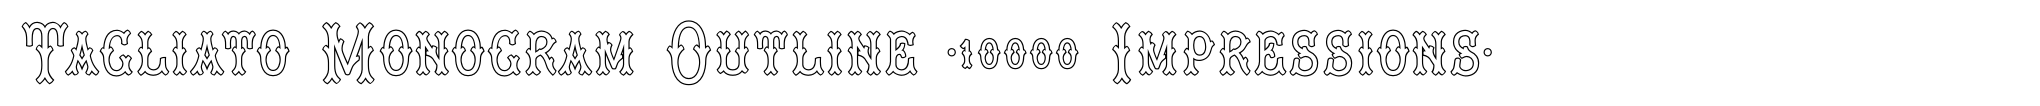 Tagliato Monogram Outline (10000 Impressions) image